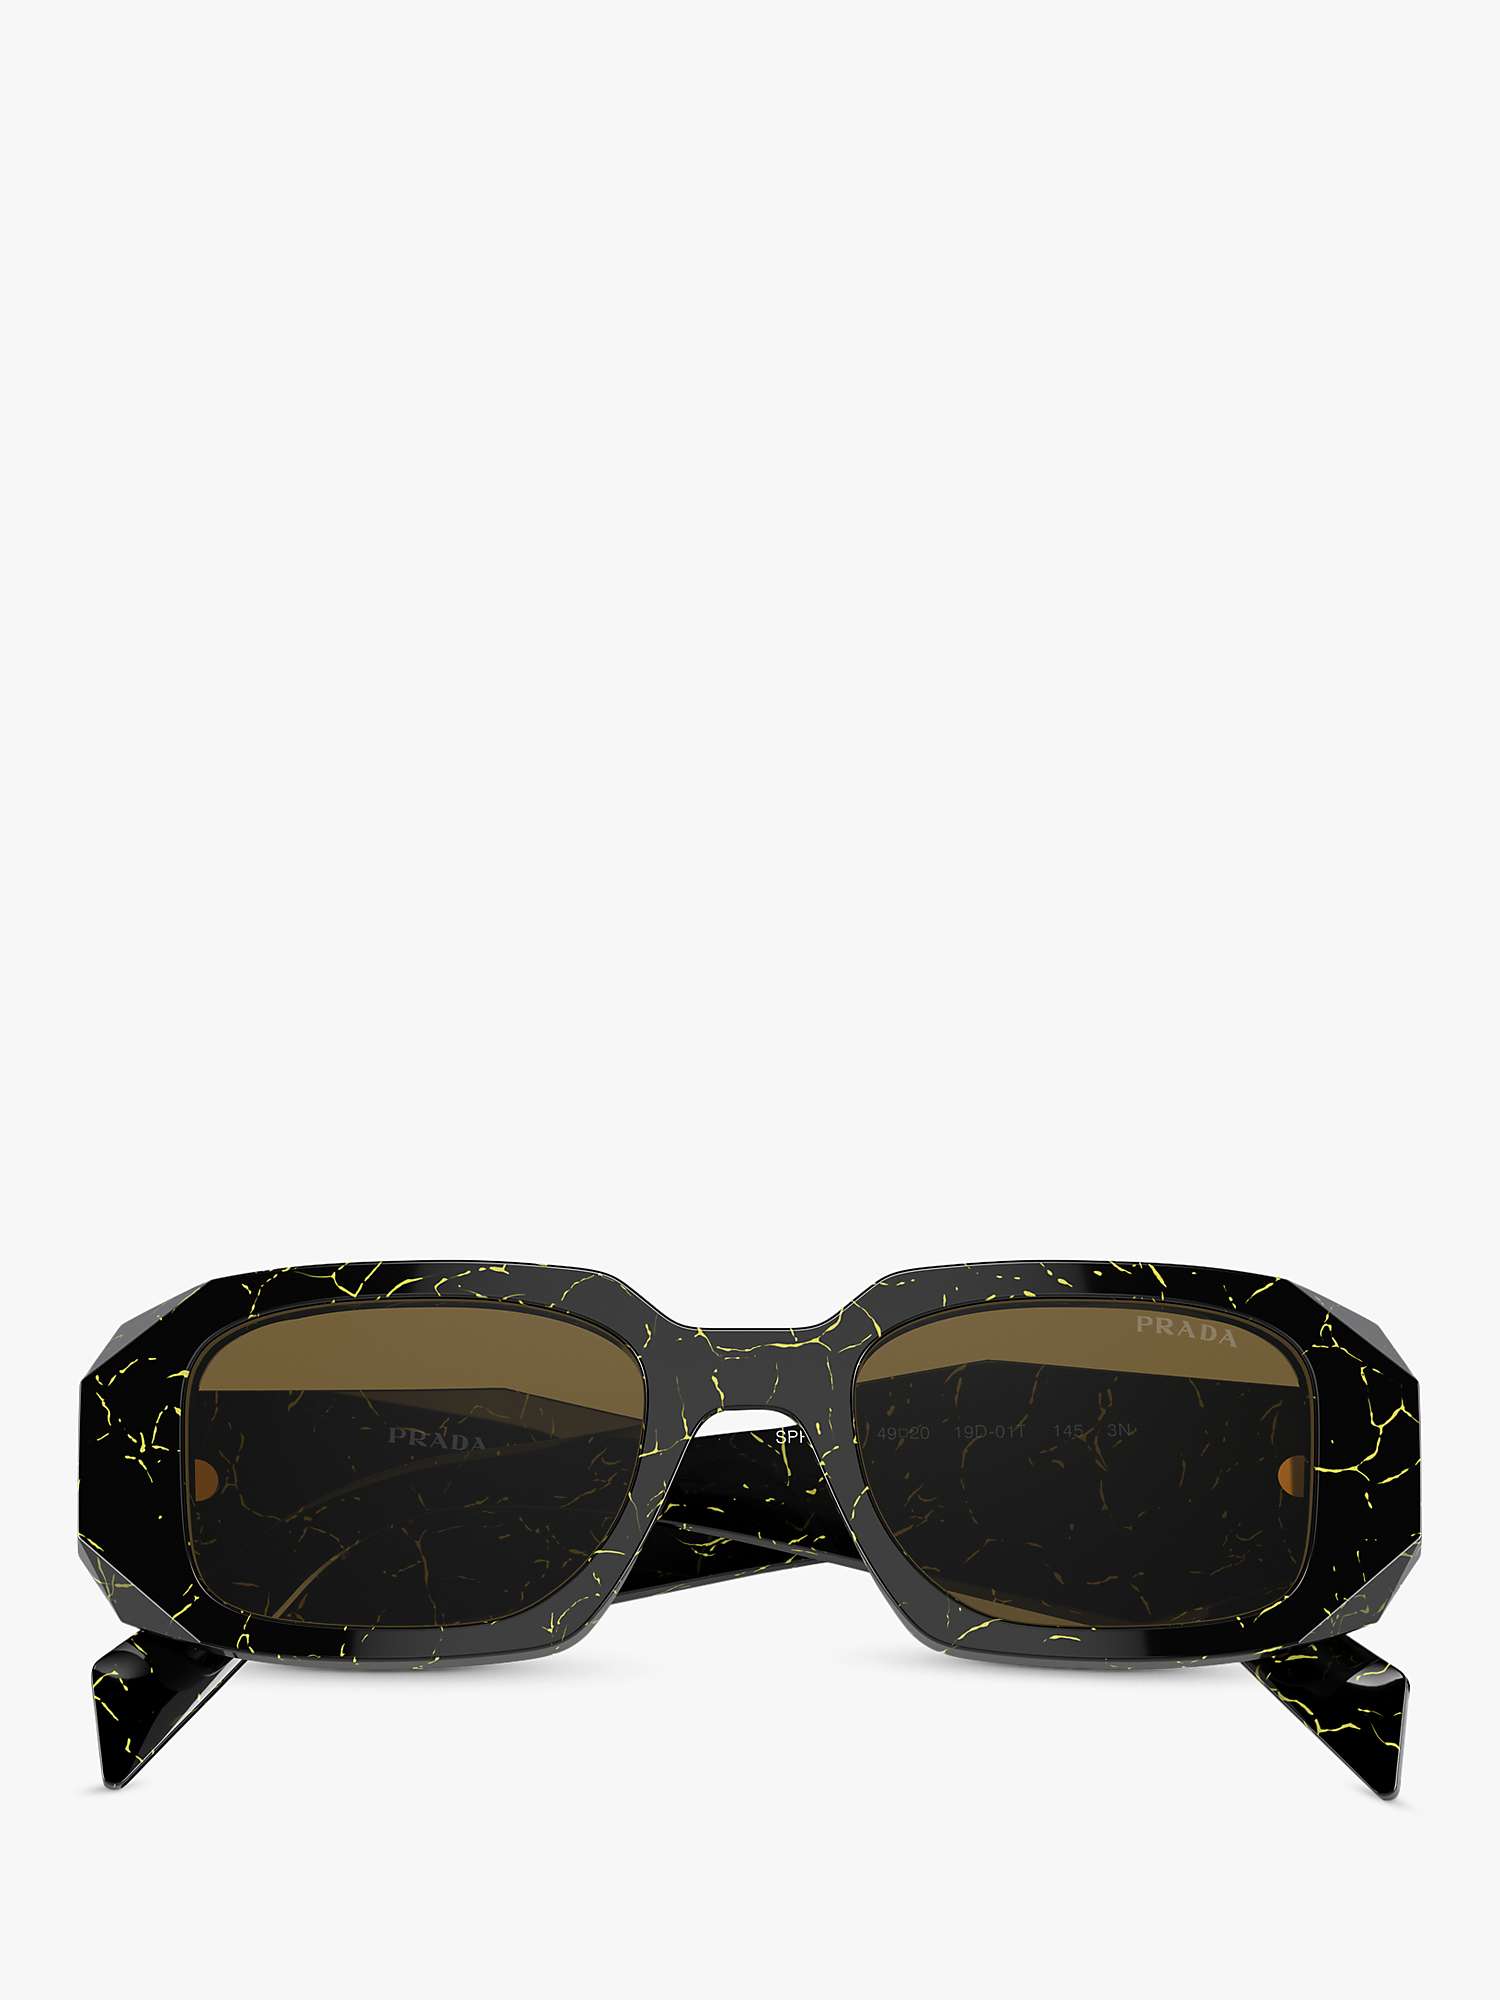 Buy Prada PR 17WS Women's Rectangular Sunglasses, Black/Yellow Marble Online at johnlewis.com